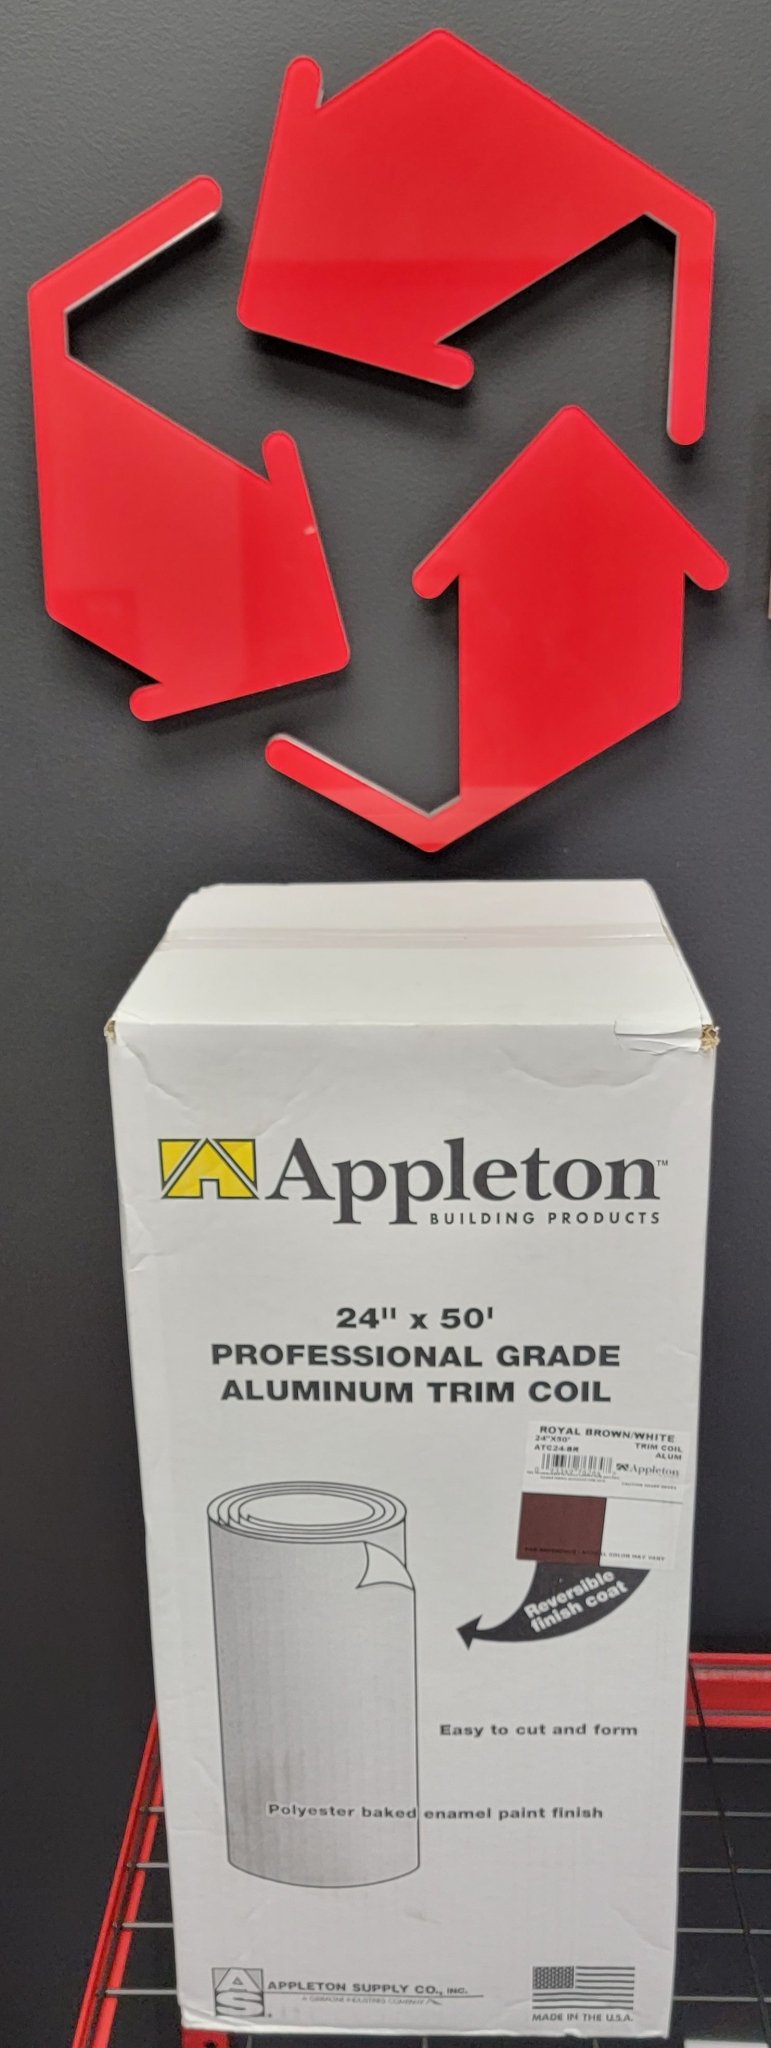 Appleton Aluminum Trim Coil 24" x 50' x .019" Royal Brown White Flashing Roll Roofing - resaled - Appleton - 093349762647